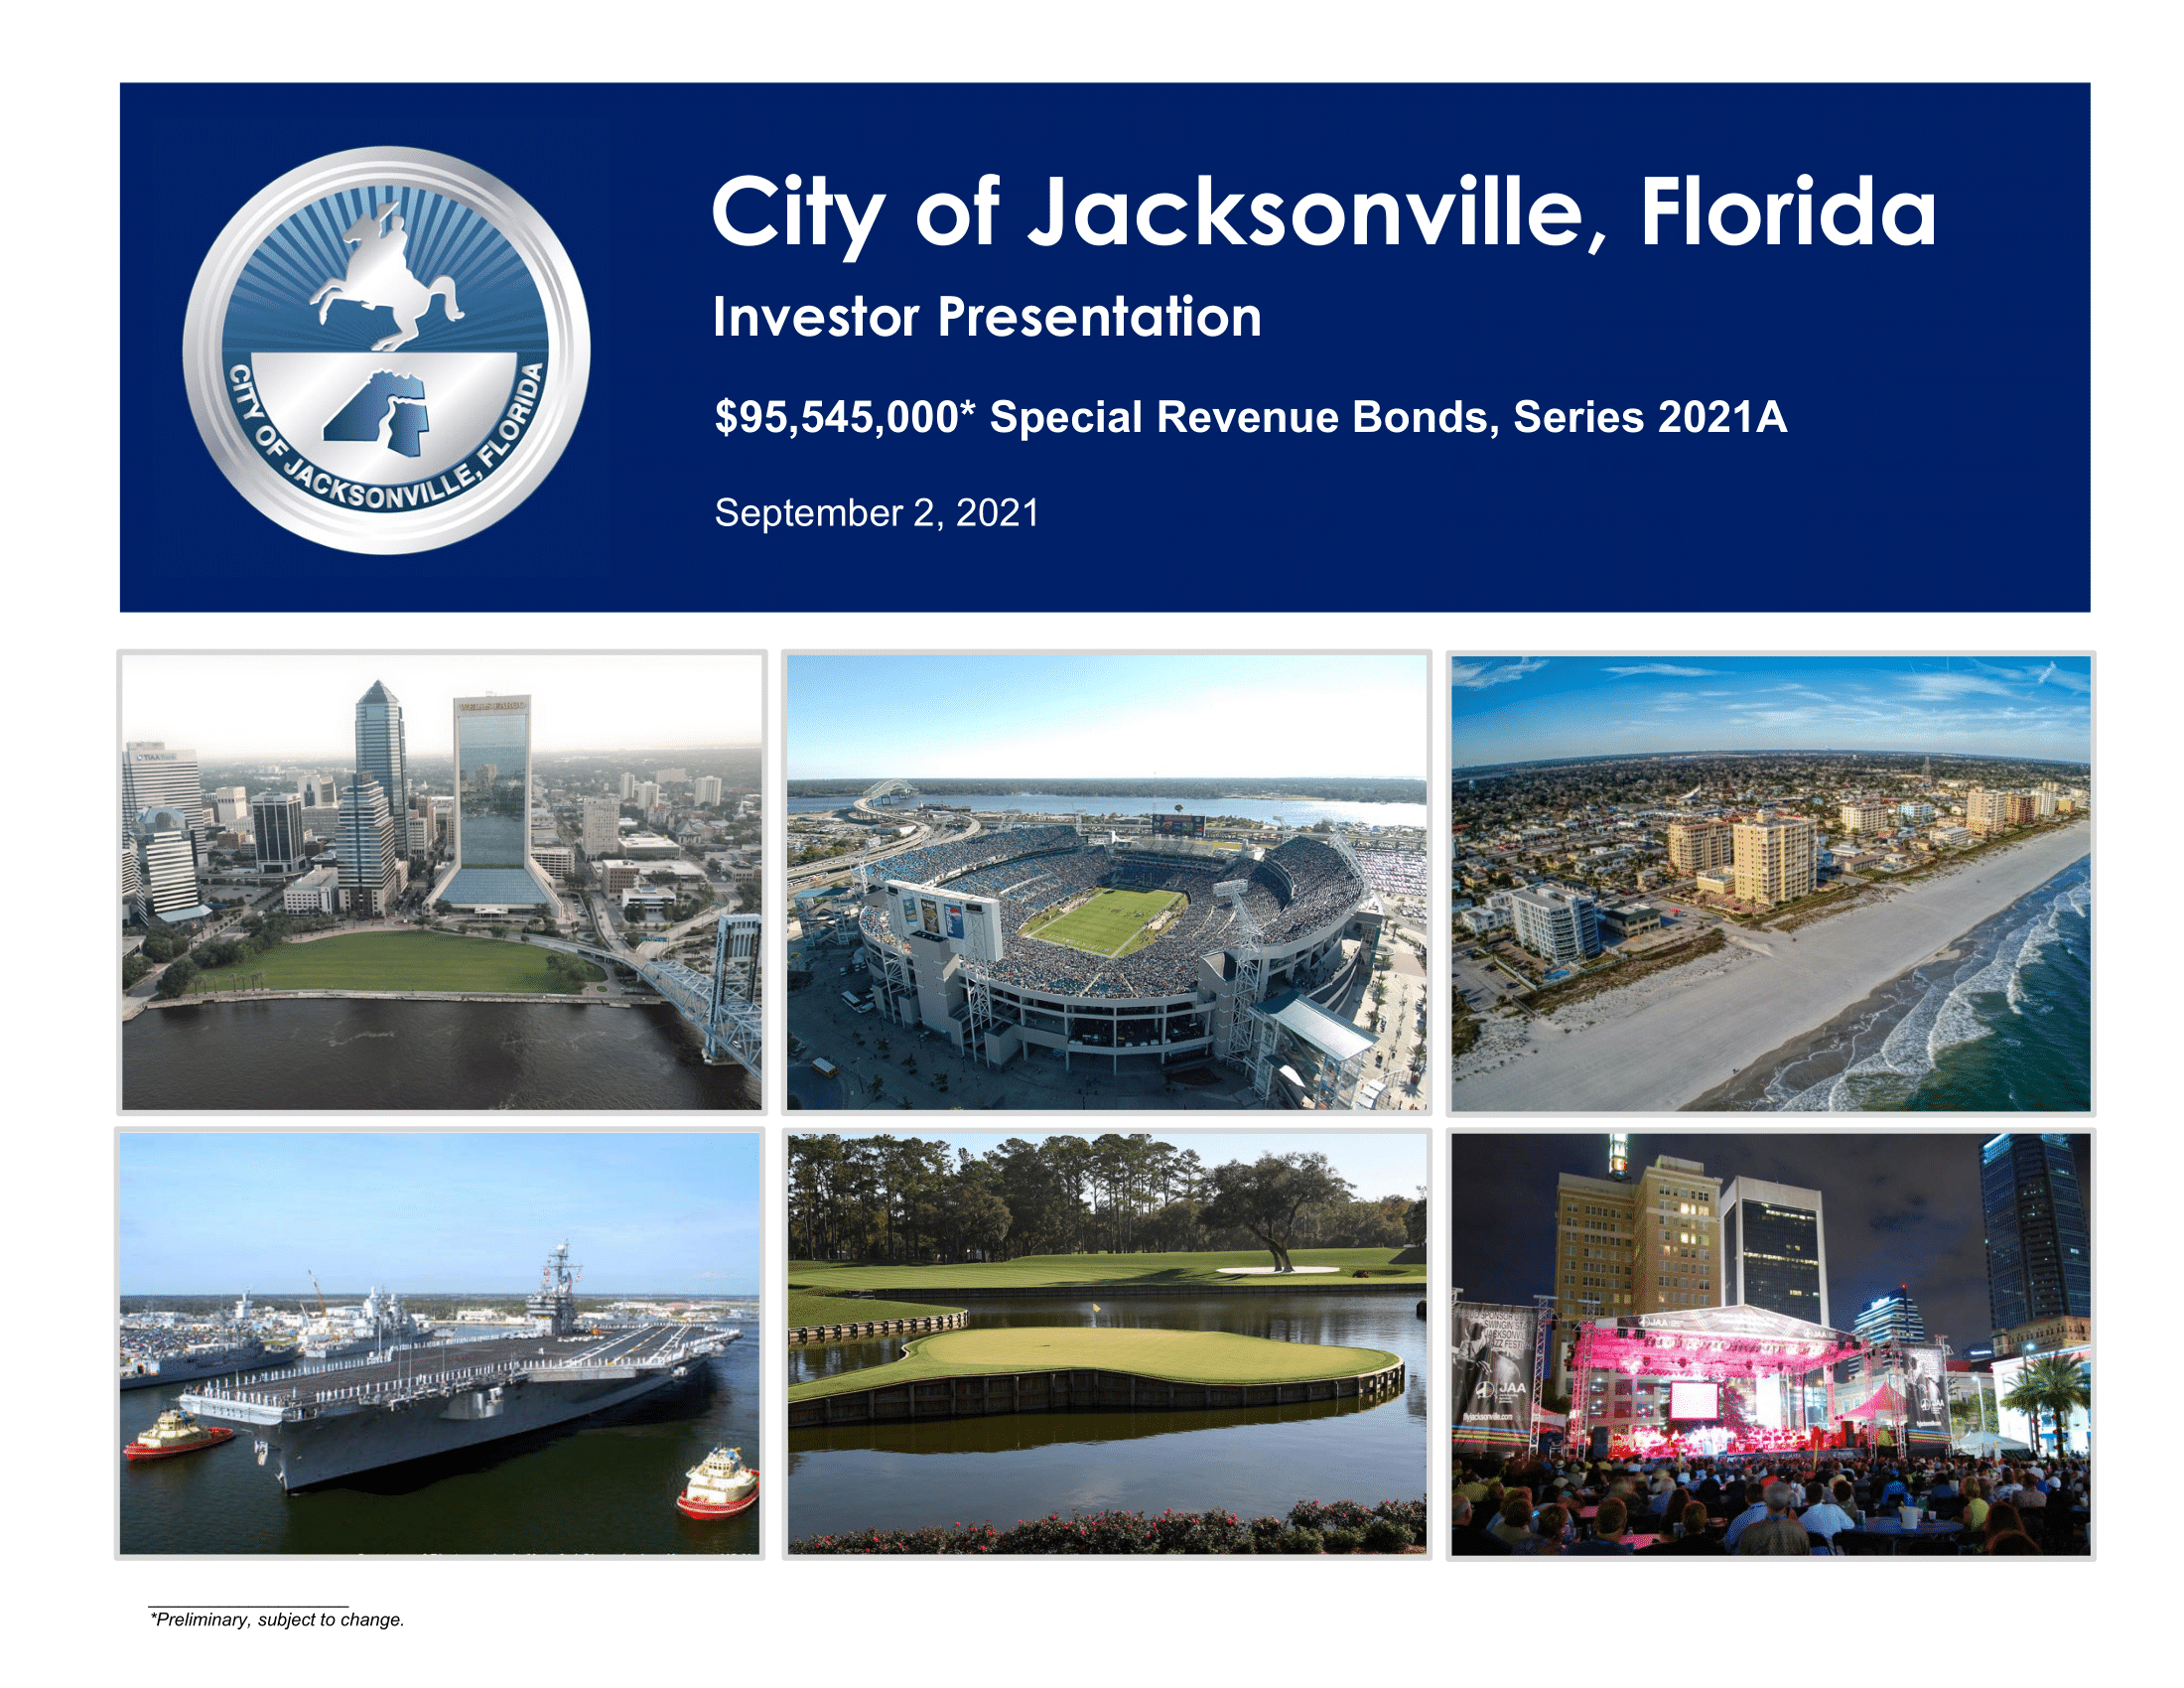 City of Jacksonville, Florida Investor Presentation